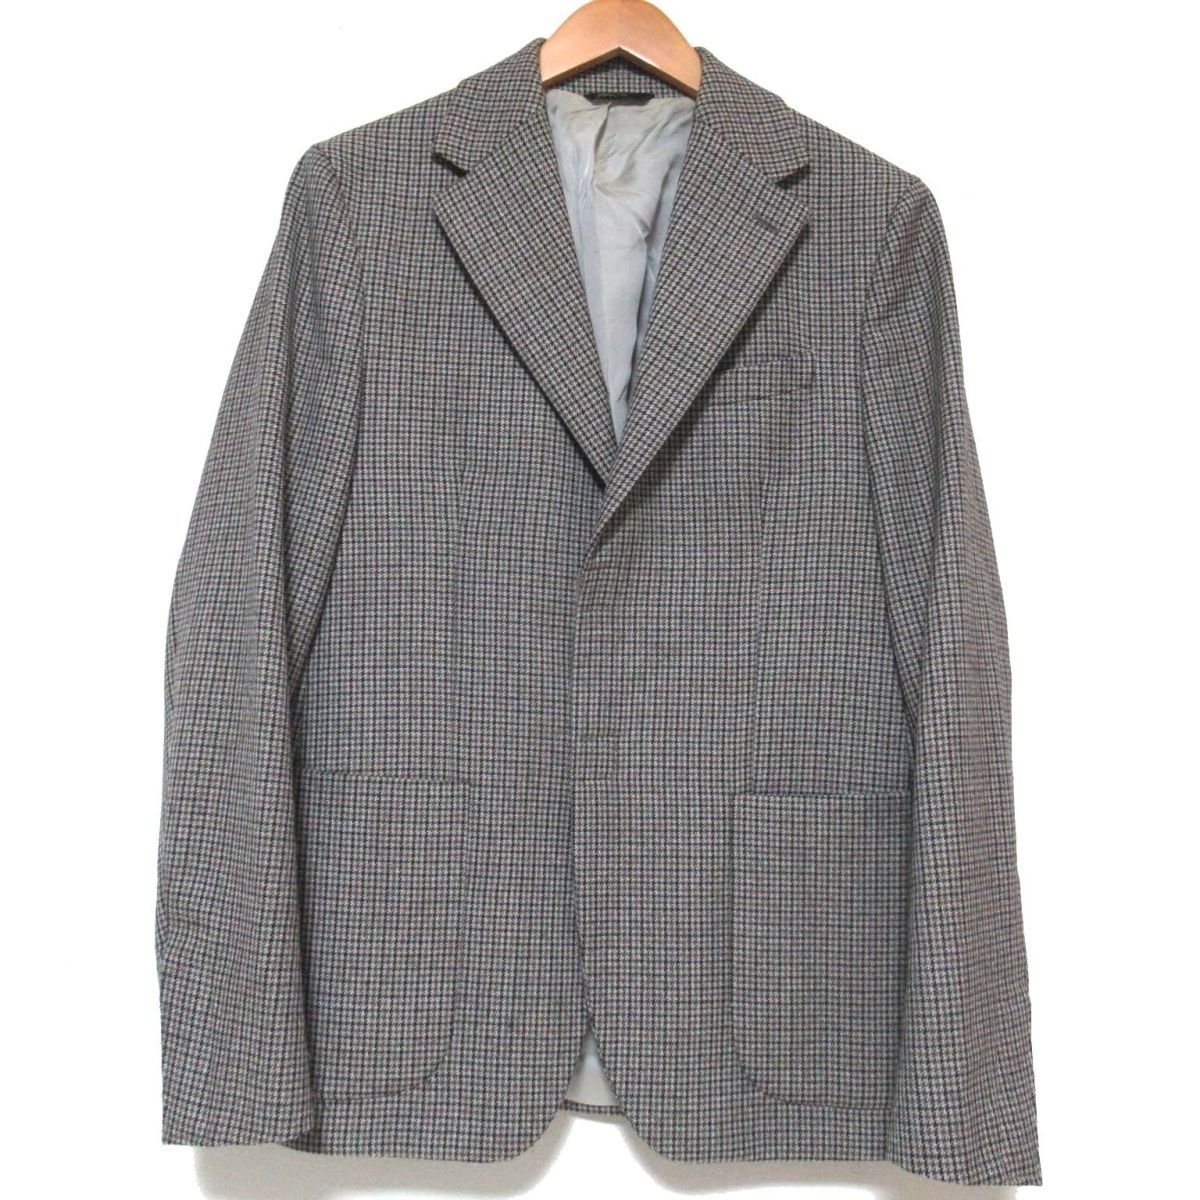  beautiful goods FENDI Fendi 2018 year of model check pattern velcro front ratio wing single tailored jacket 44 size gray series 